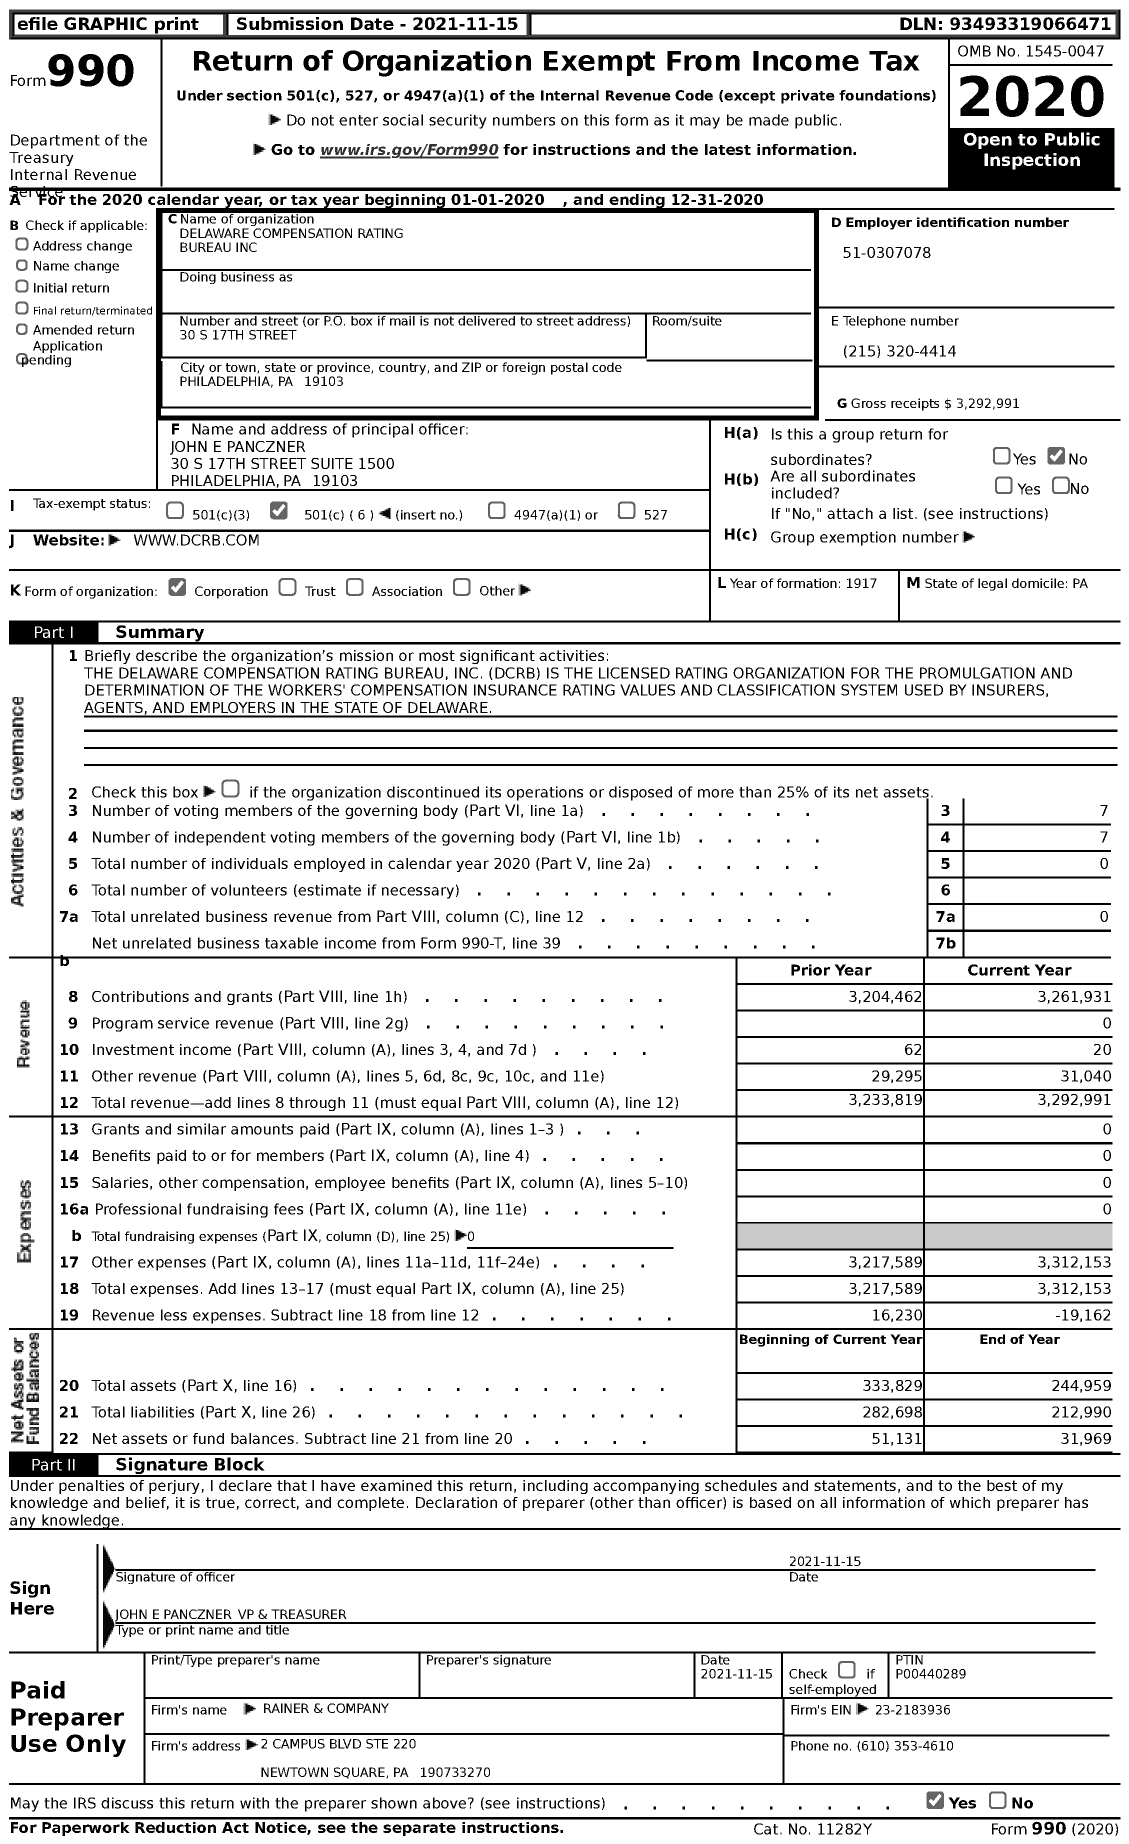 Image of first page of 2020 Form 990 for Delaware Compensation Rating Bureau (DCRB)